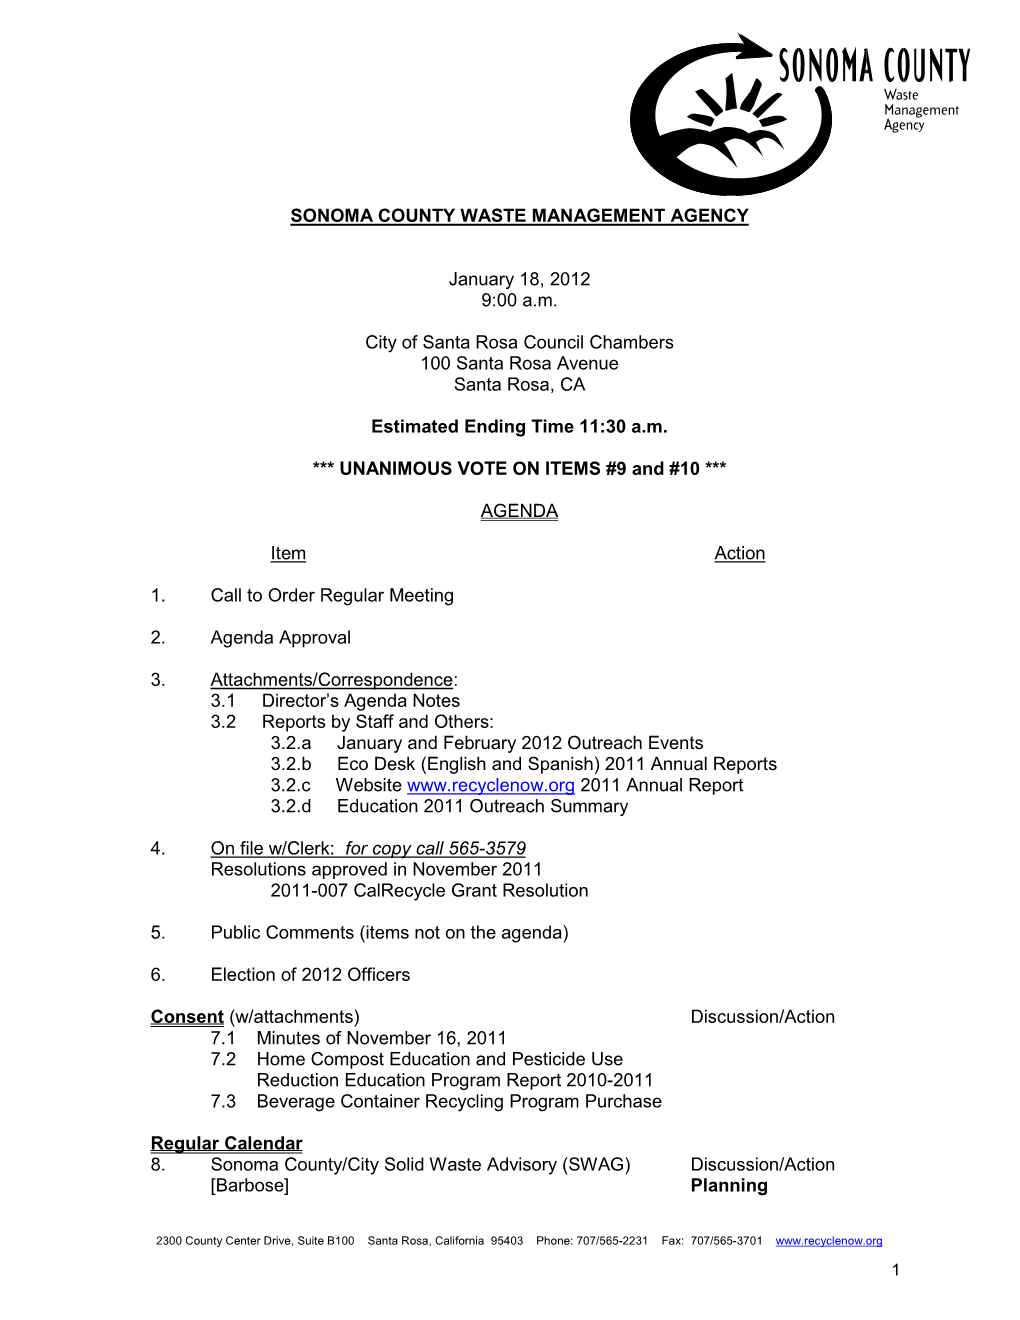 Sonoma County Waste Management Agency Agenda Packet January 18